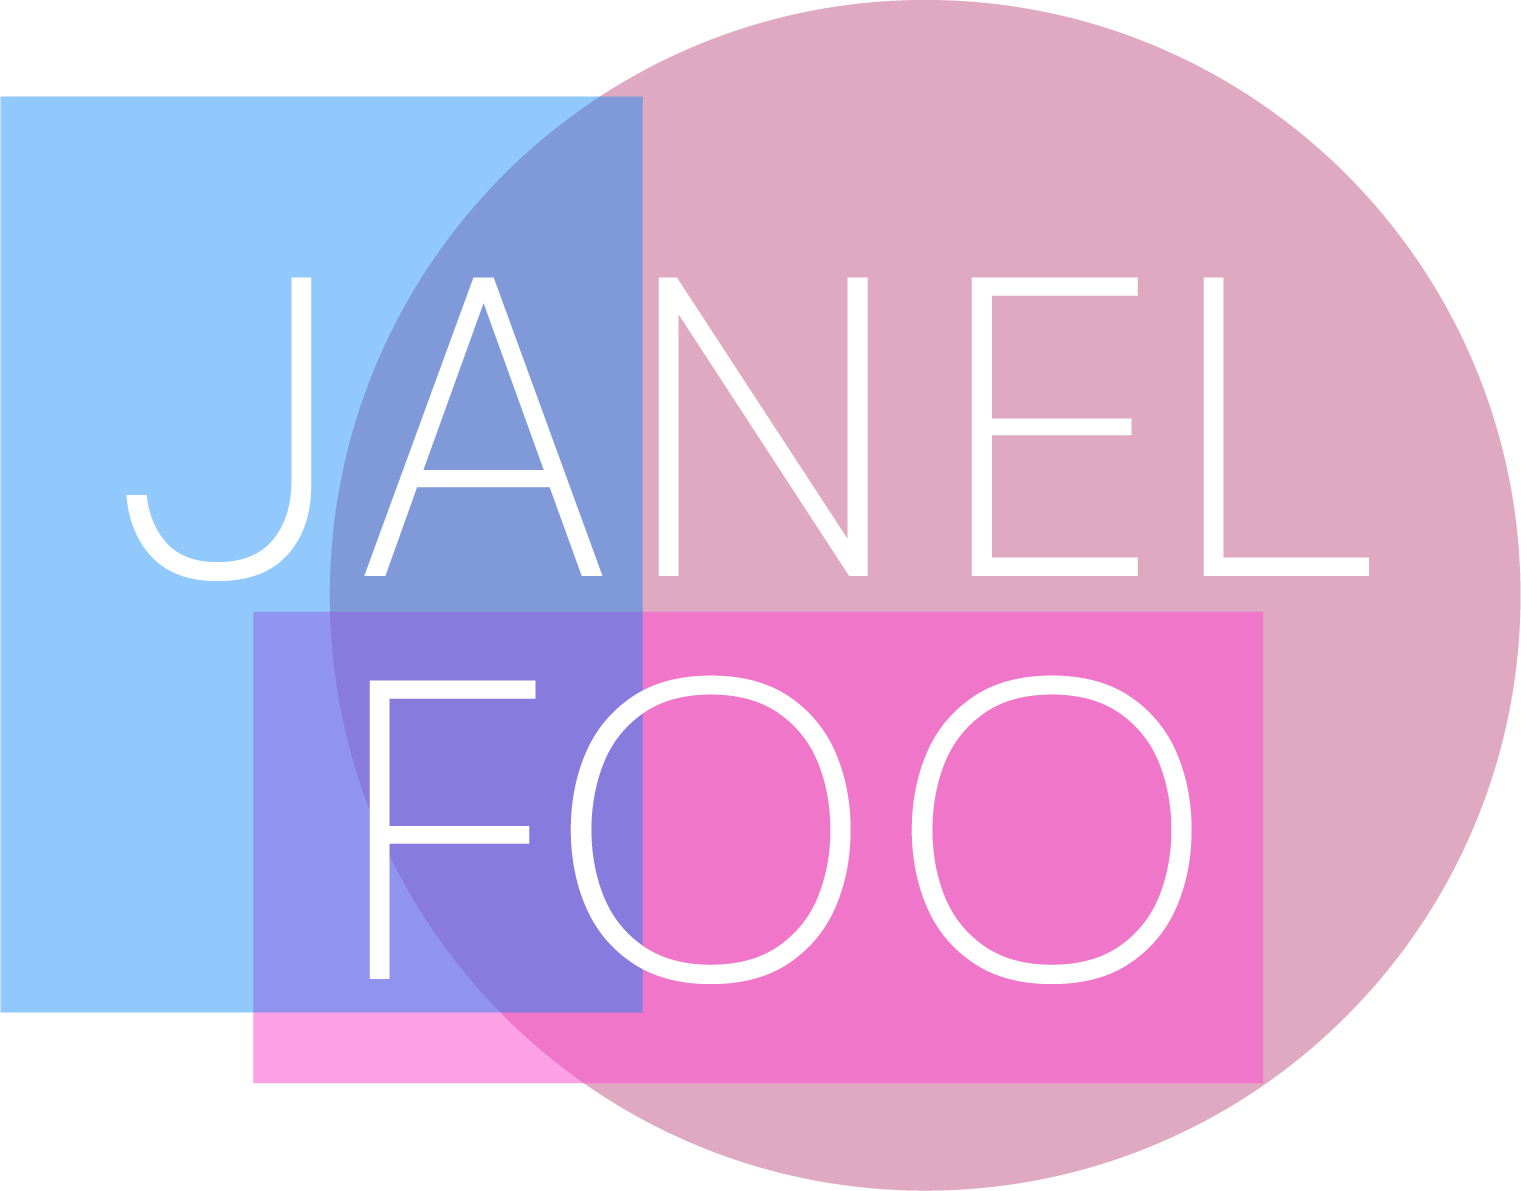 Janel Foo